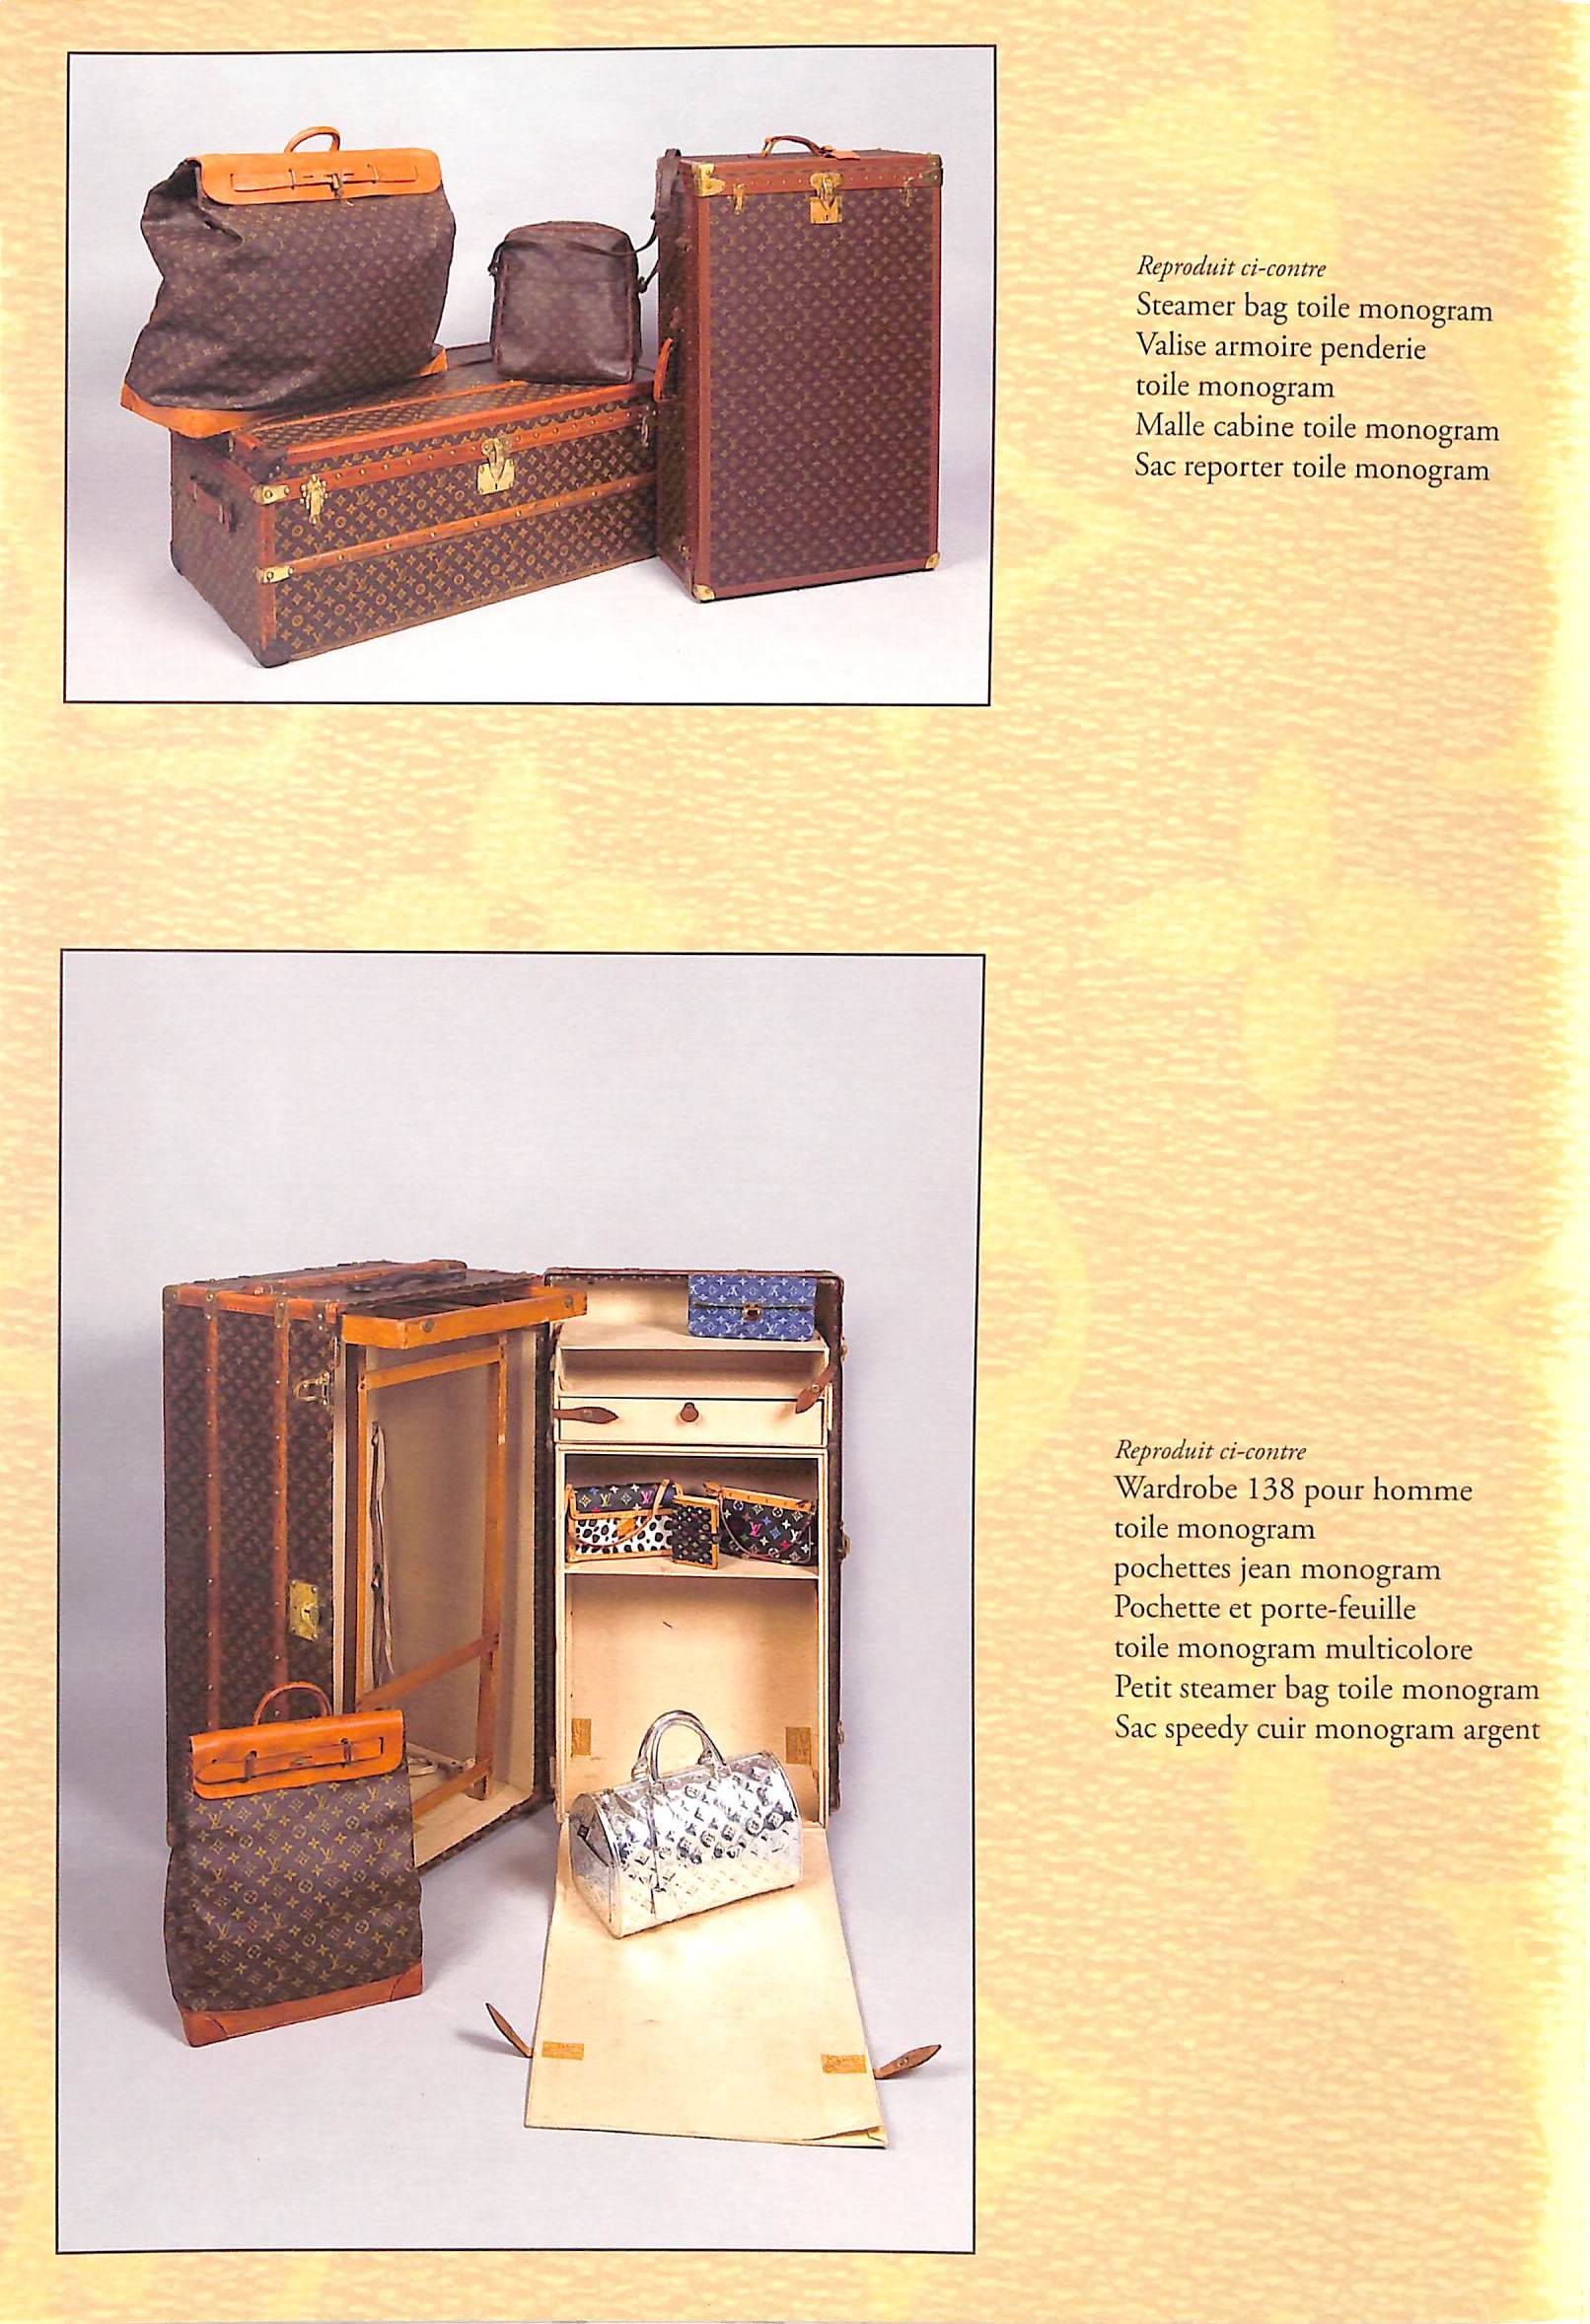 Sold at Auction: Louis Vuitton, Louis Vuitton: a Monogram Steamer